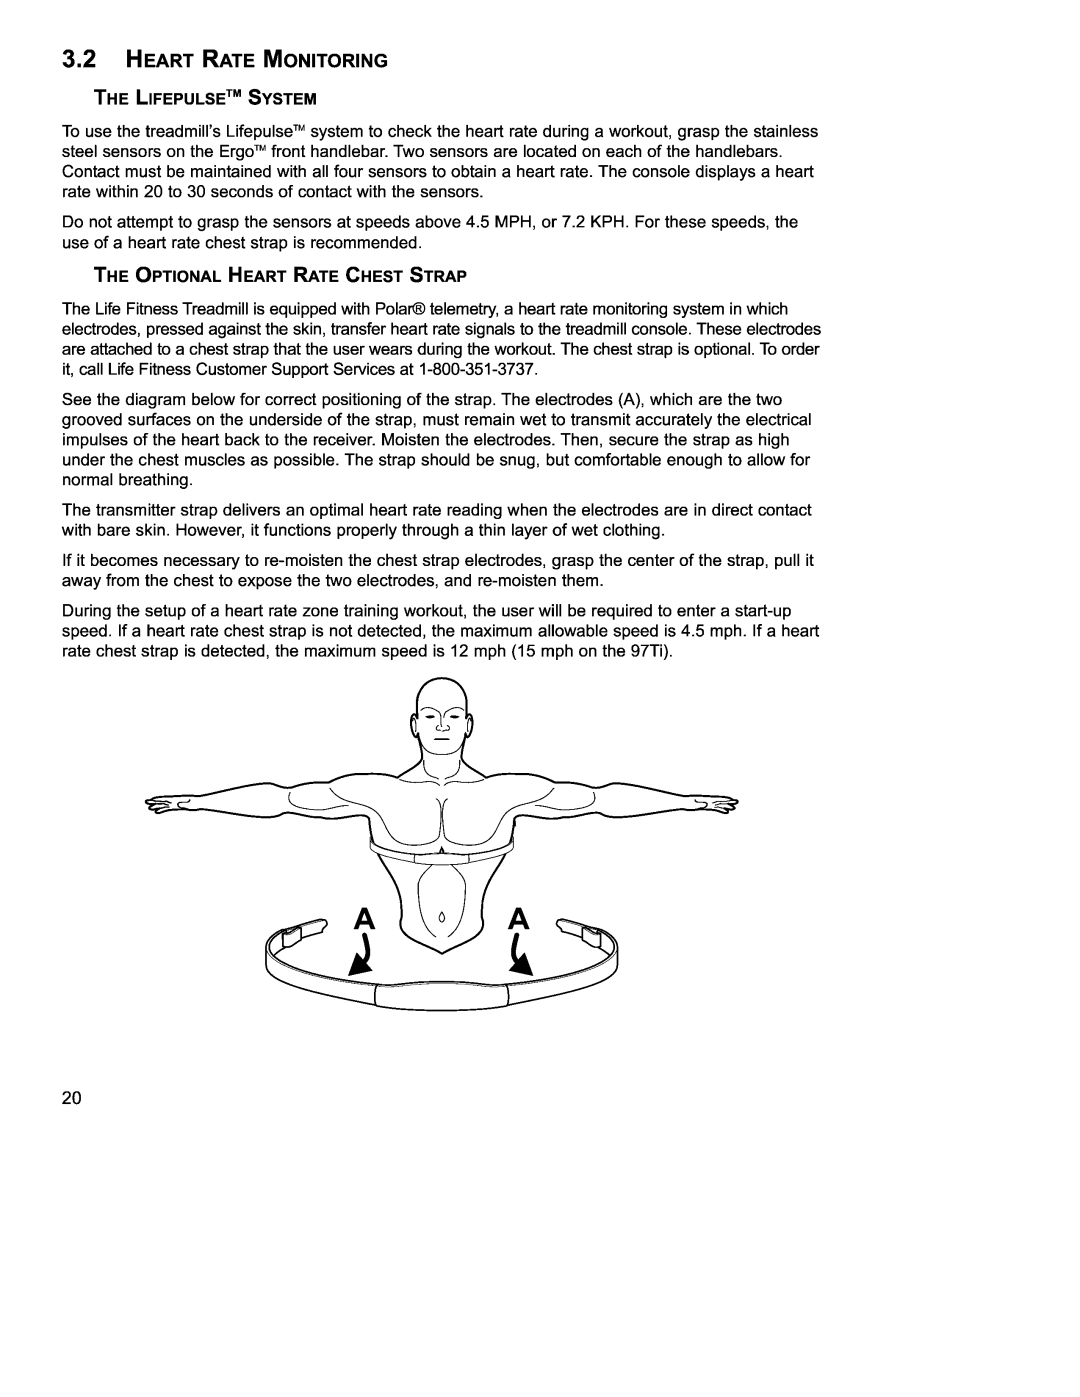 Life Fitness 97Ti operation manual 